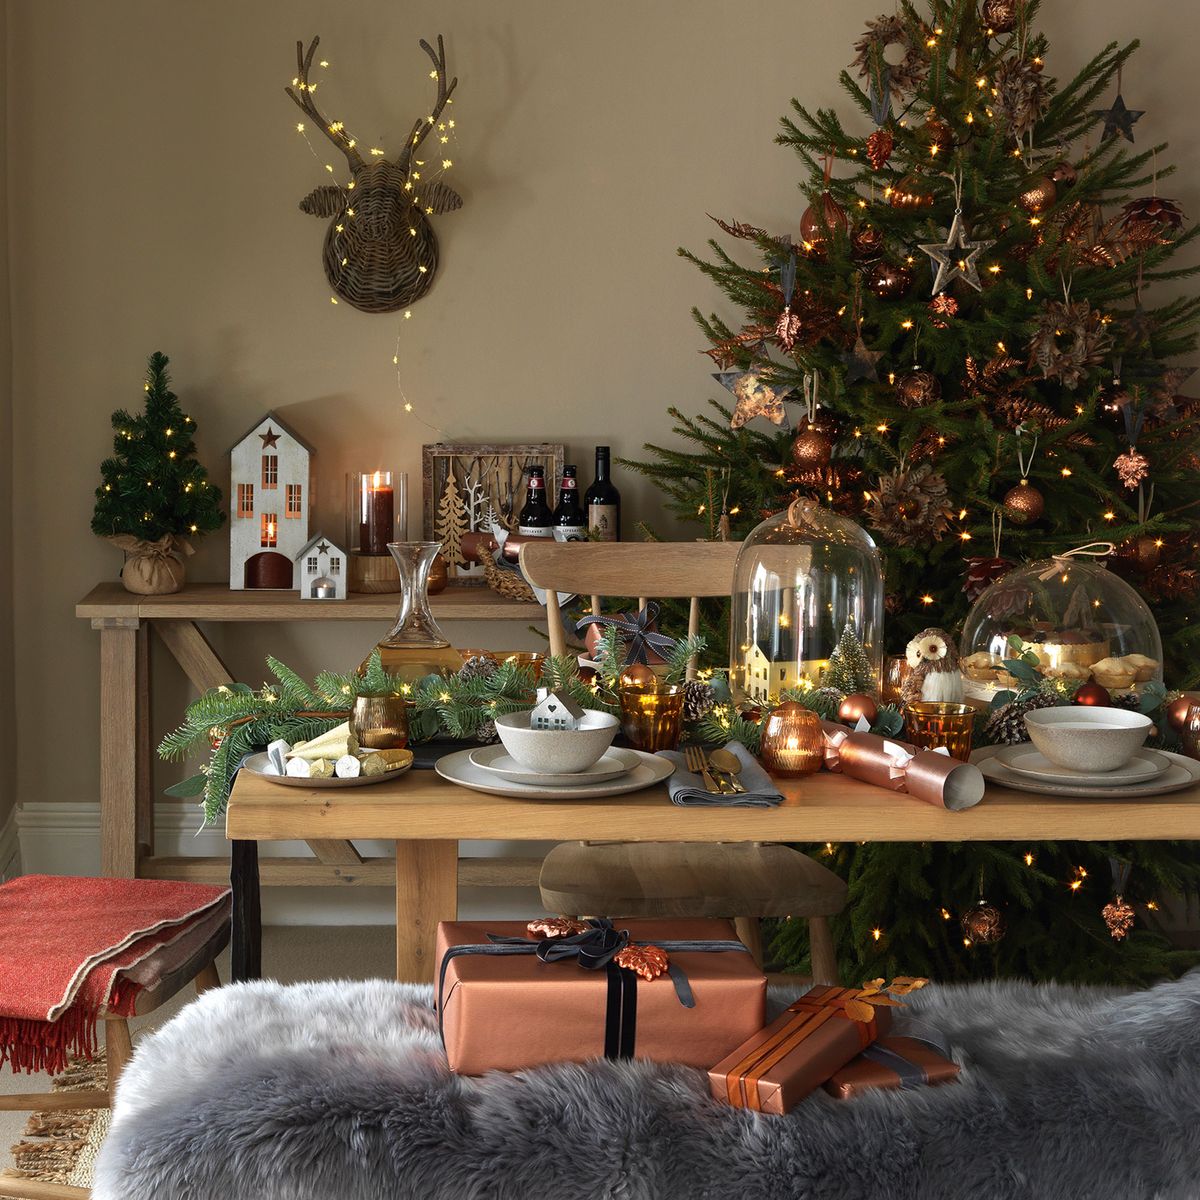 Christmas table centrepiece ideas – 24 ways to make a festive focal point